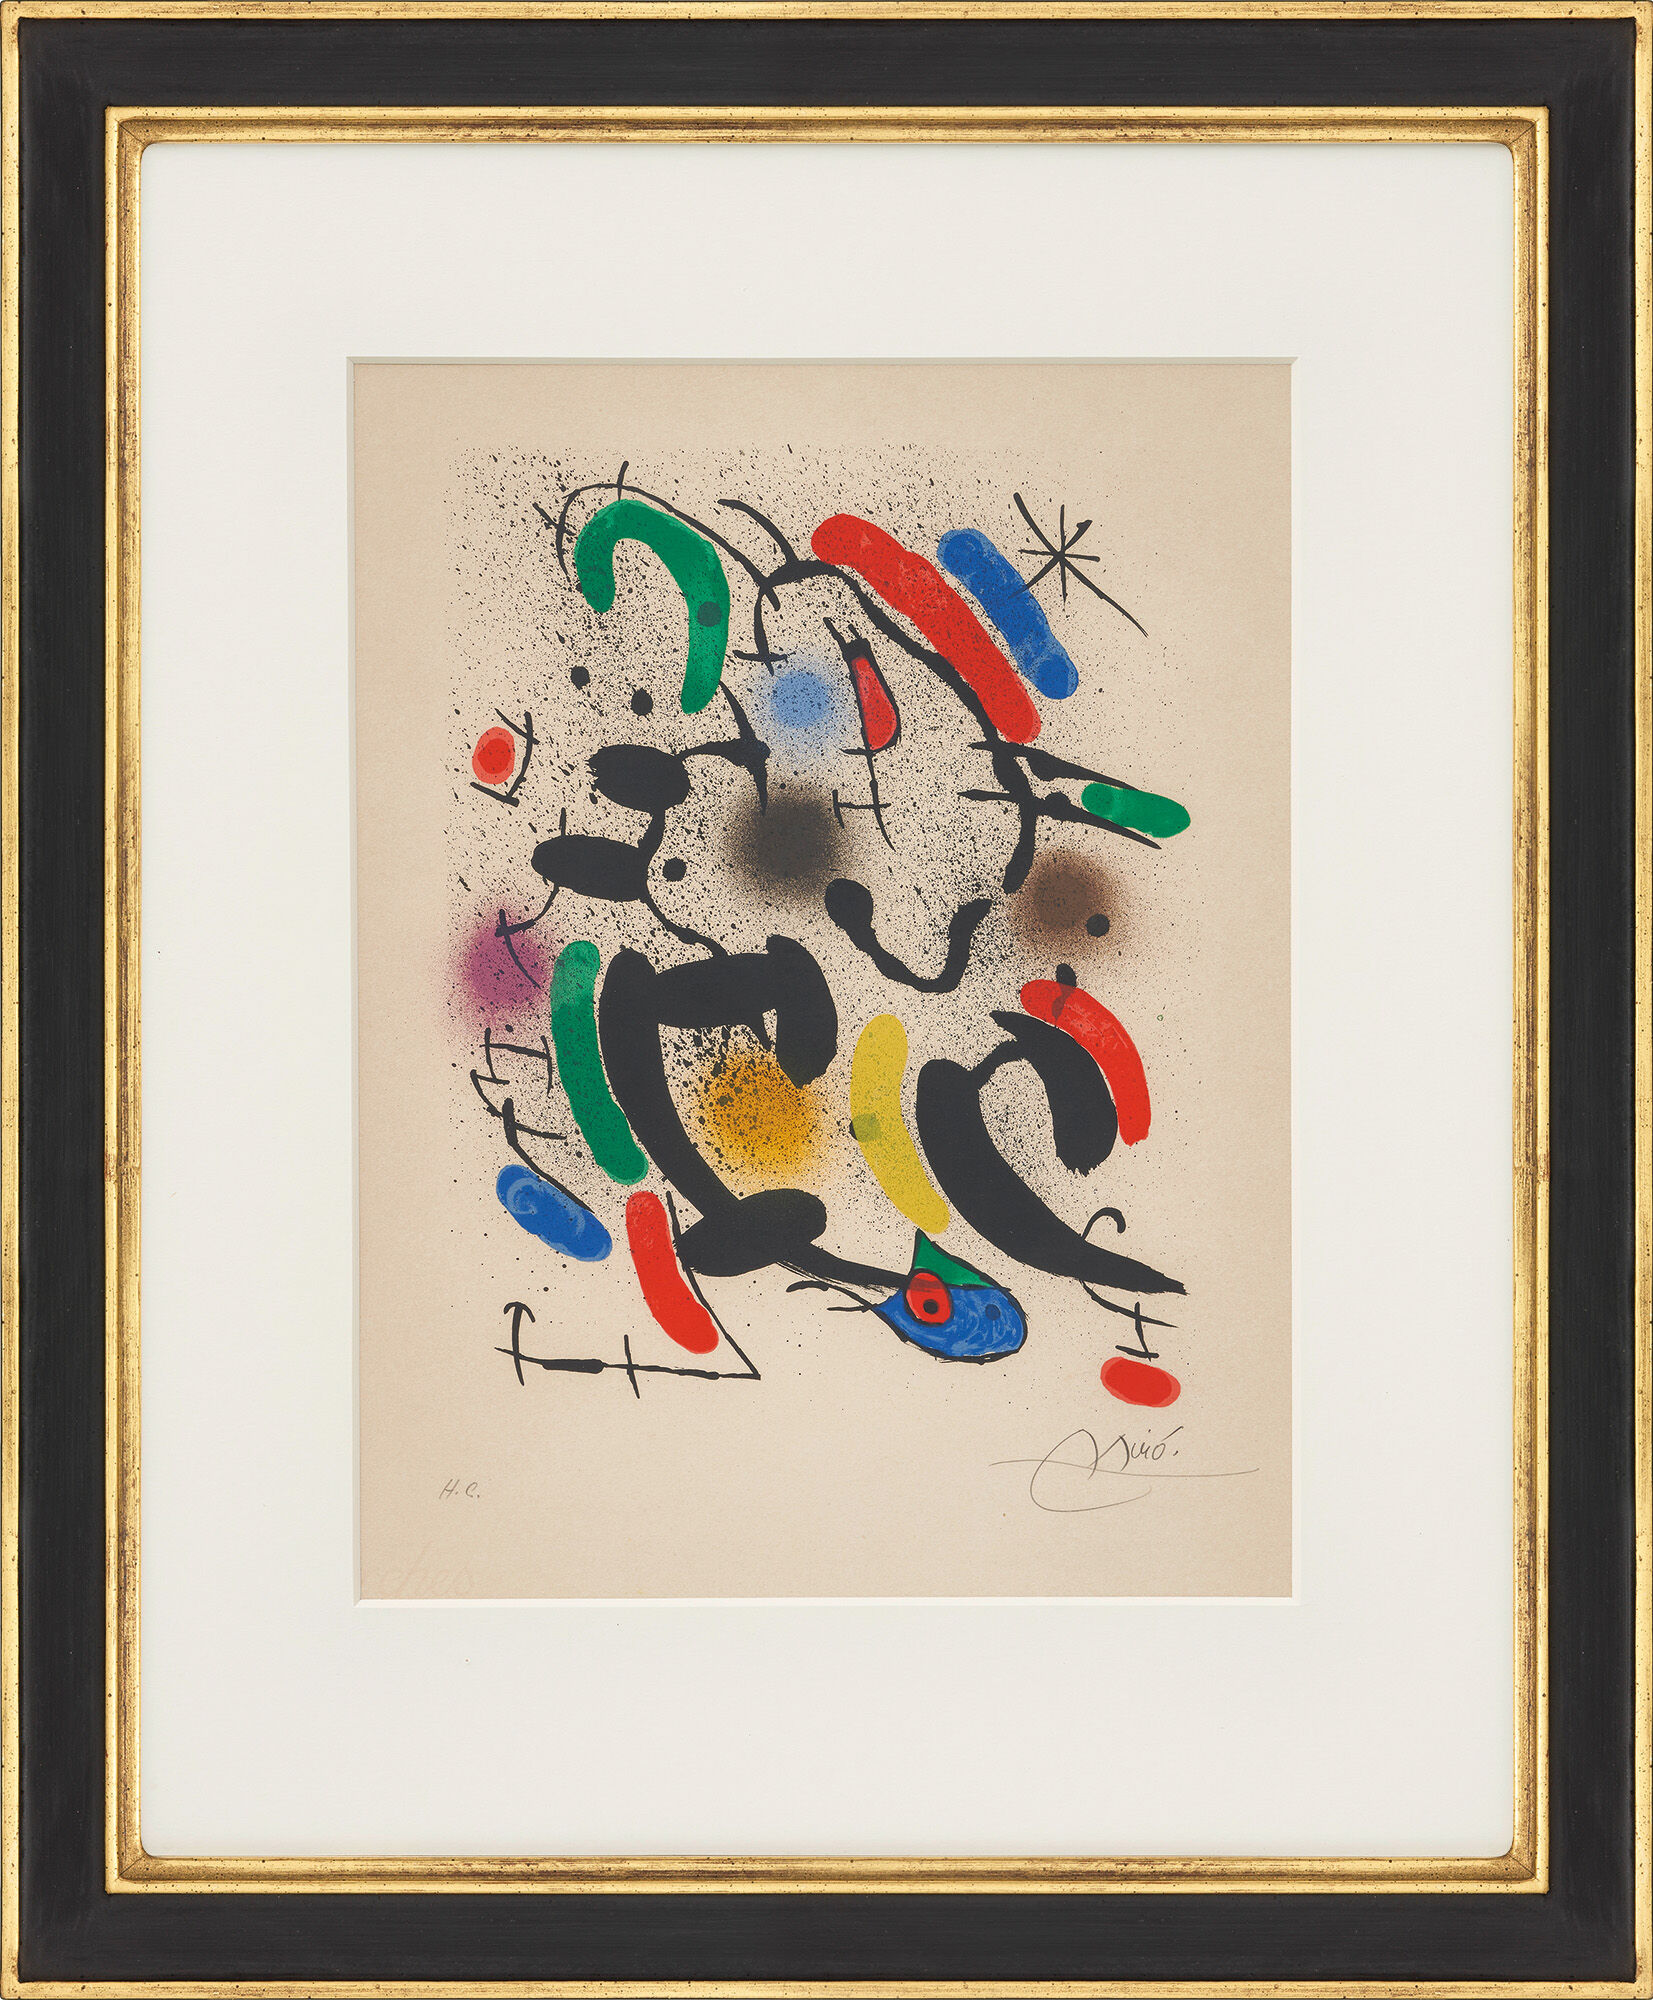 Bild aus der Serie "Joan Miró Lithographe I. (No. 2)" (1972) von Joan Miró